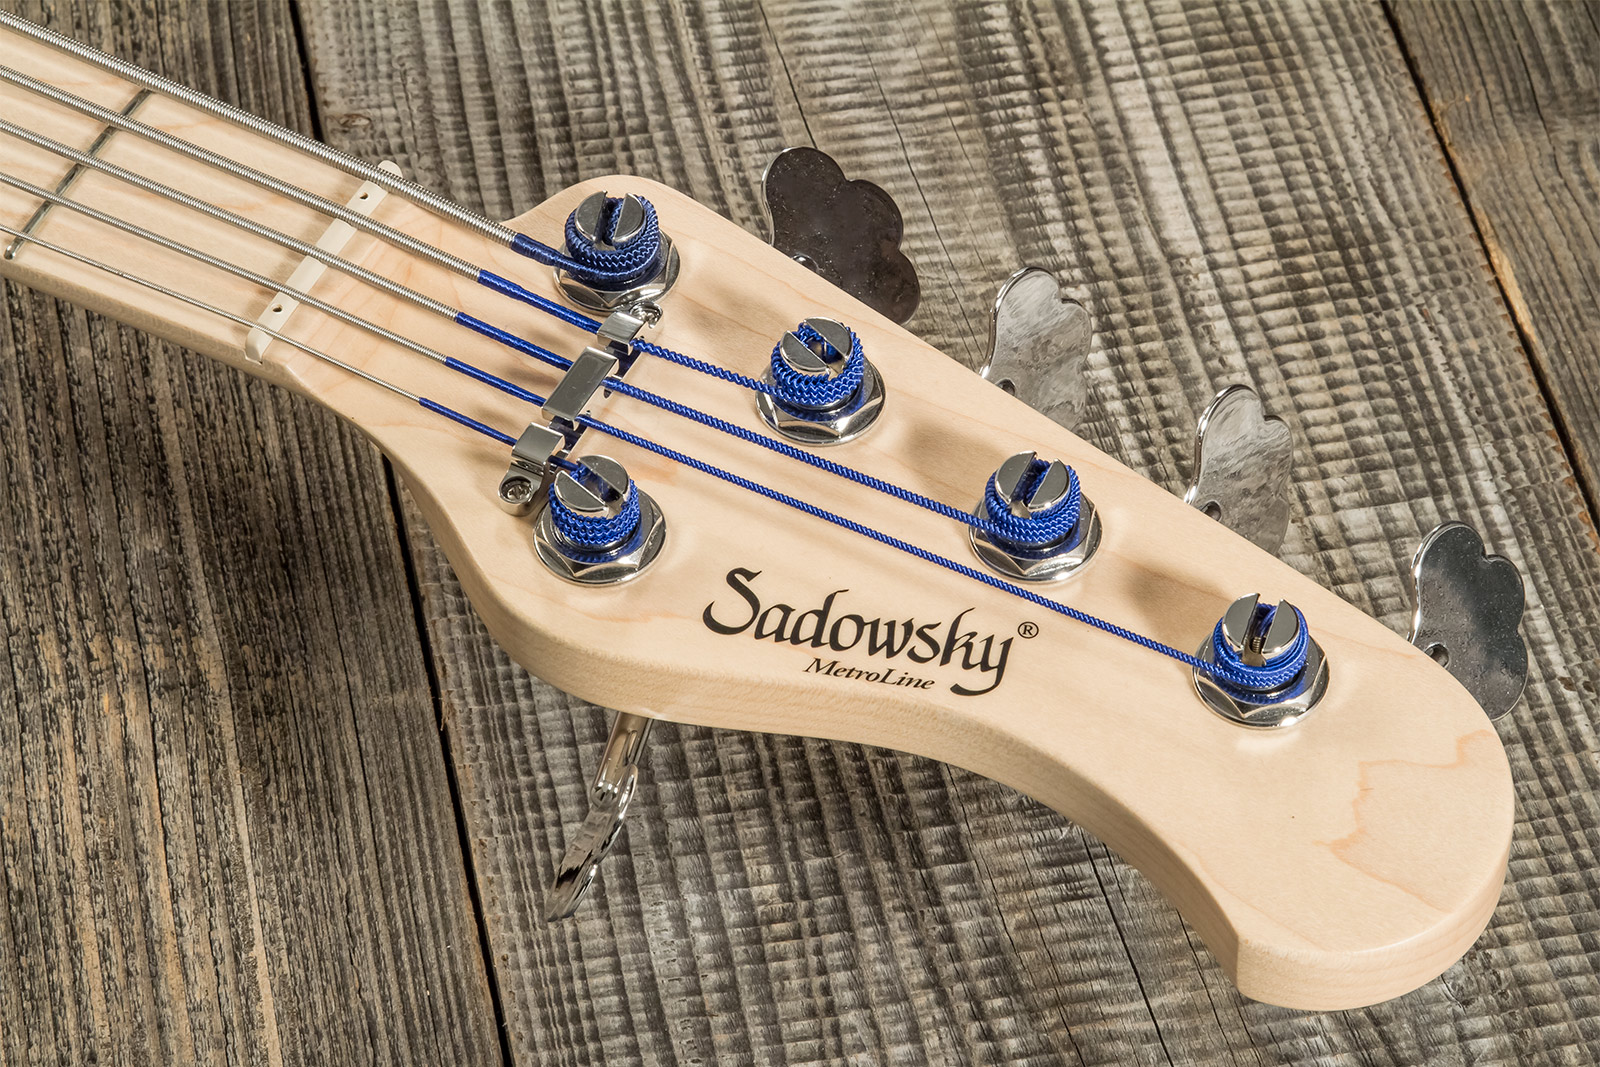 Sadowsky Single Cut Bass 24f Ash 5c Metroline All Active Mn - Satin Black Pearl - Solidbody E-bass - Variation 1